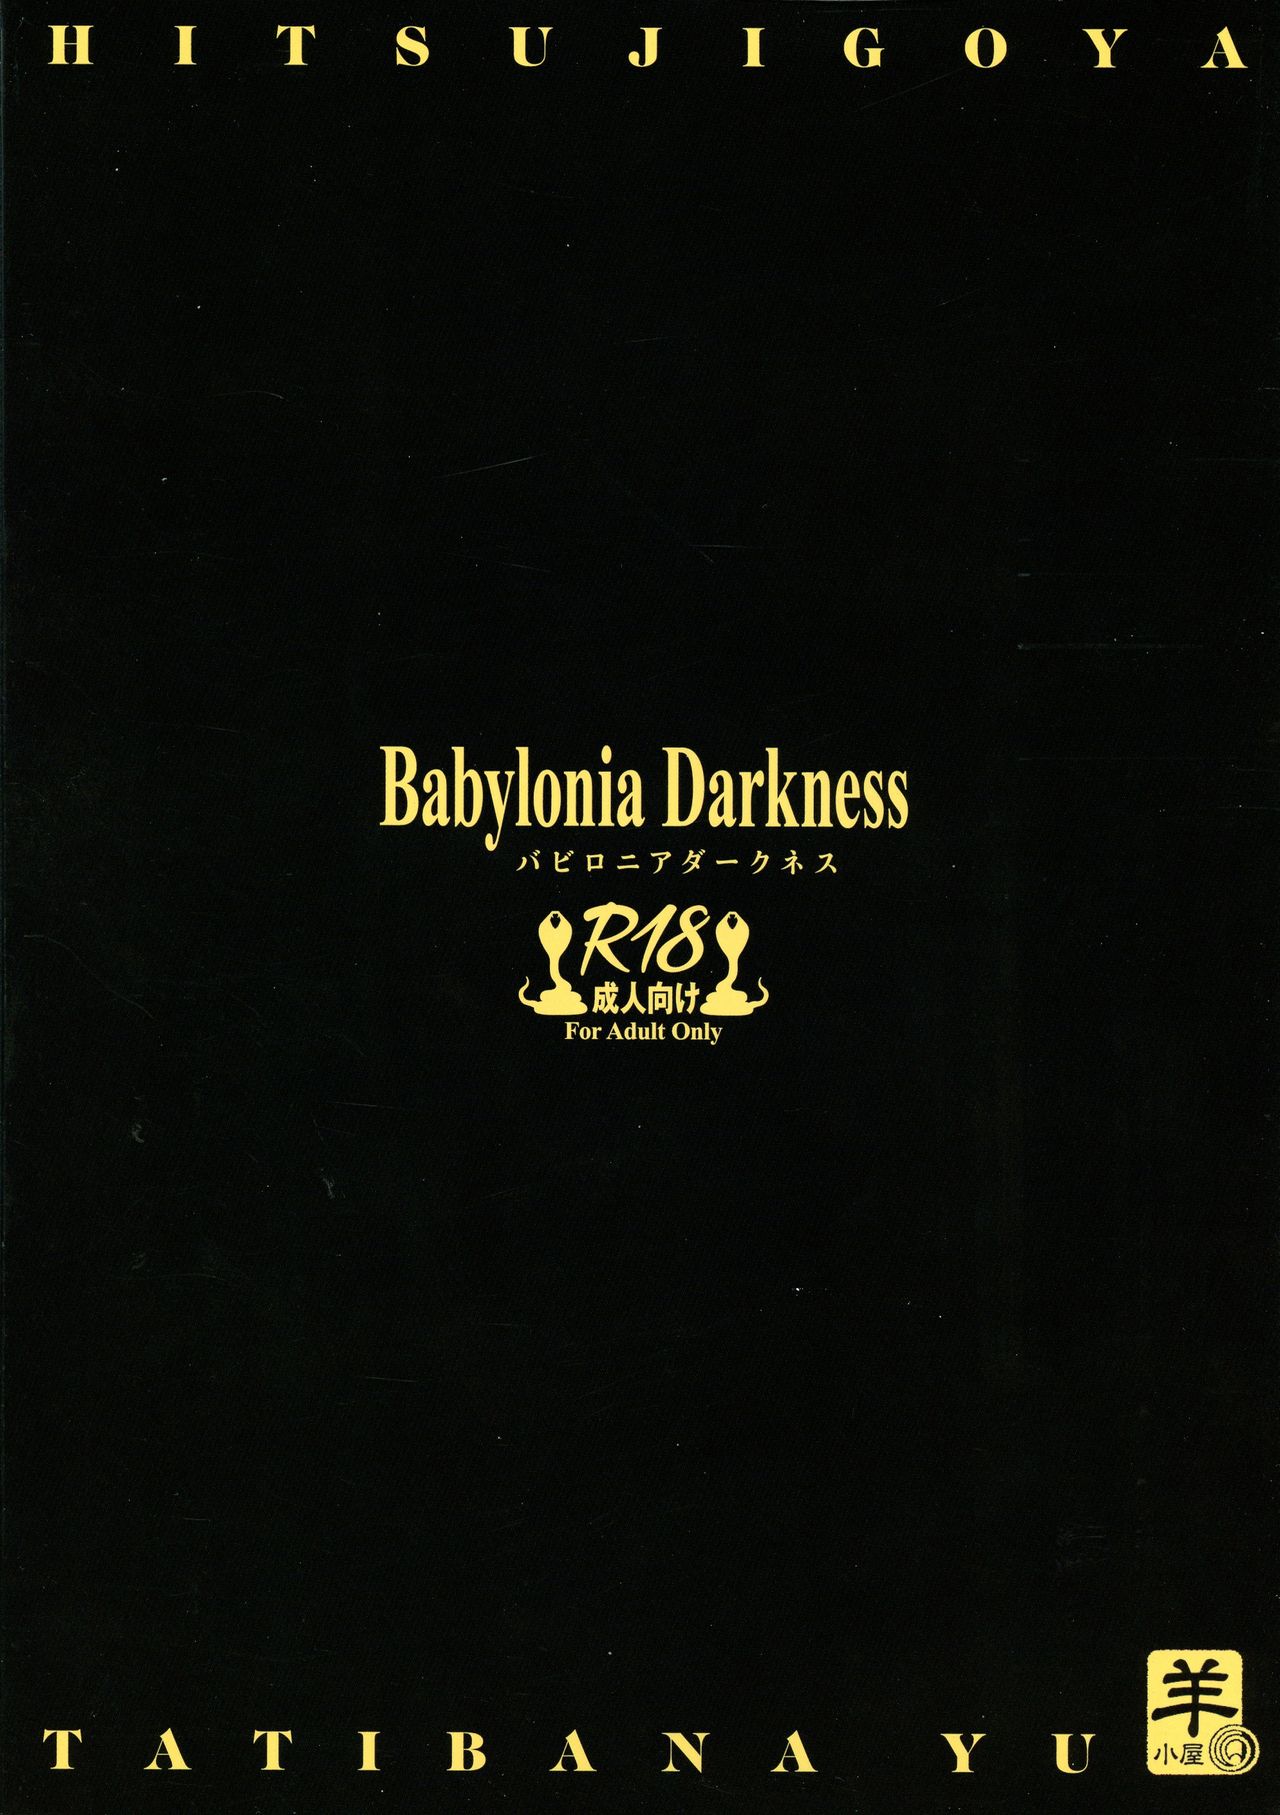 Babylonia Darkness - Foto 21